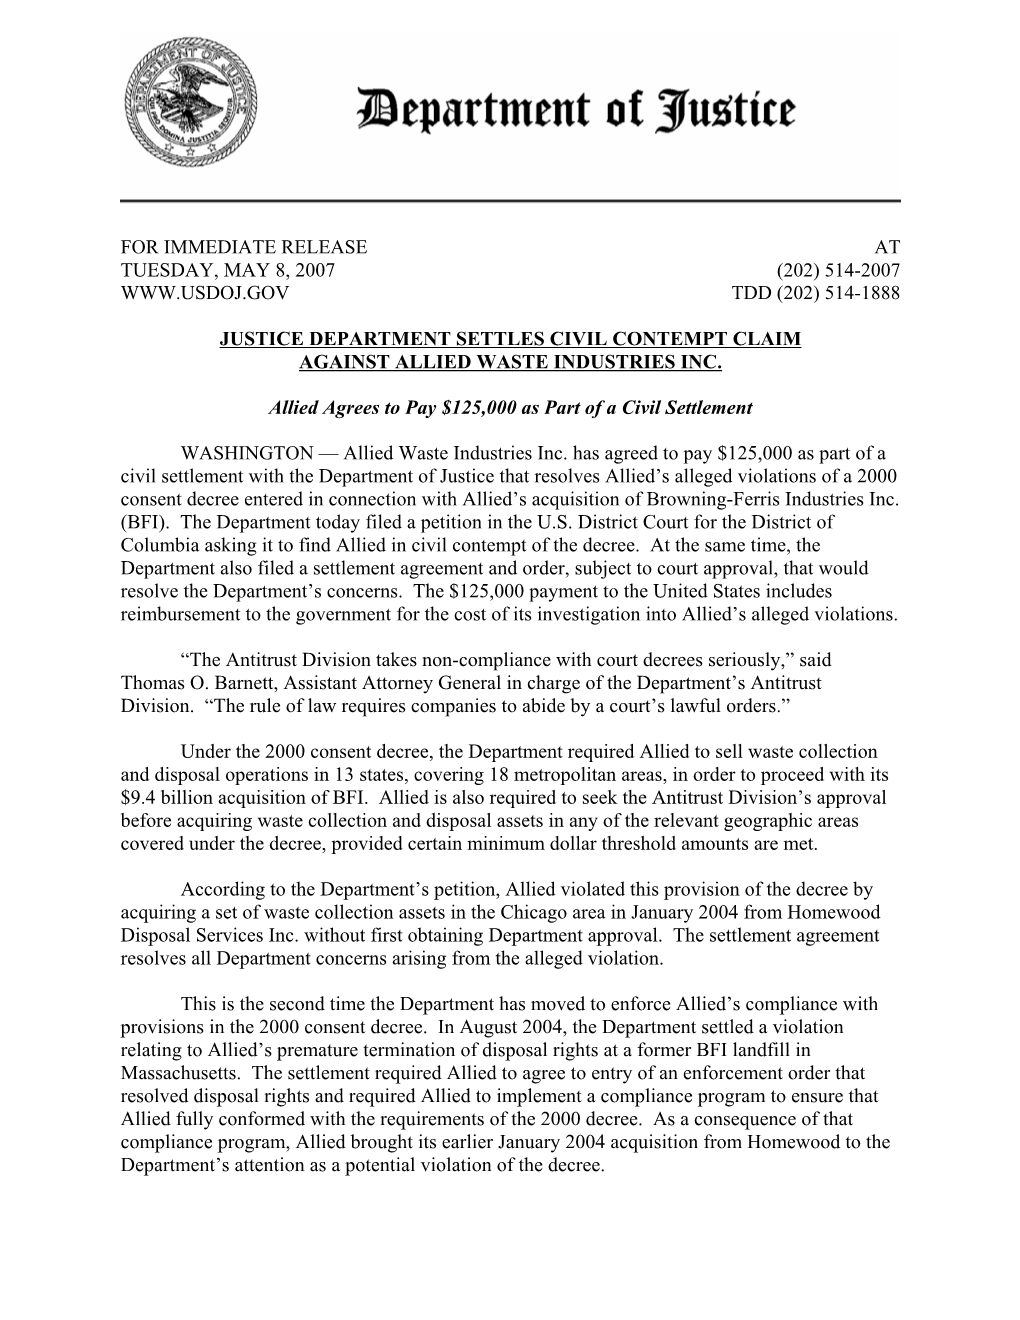 Justice Department Settles Civil Contempt Claim Against Allied Waste Industries Inc